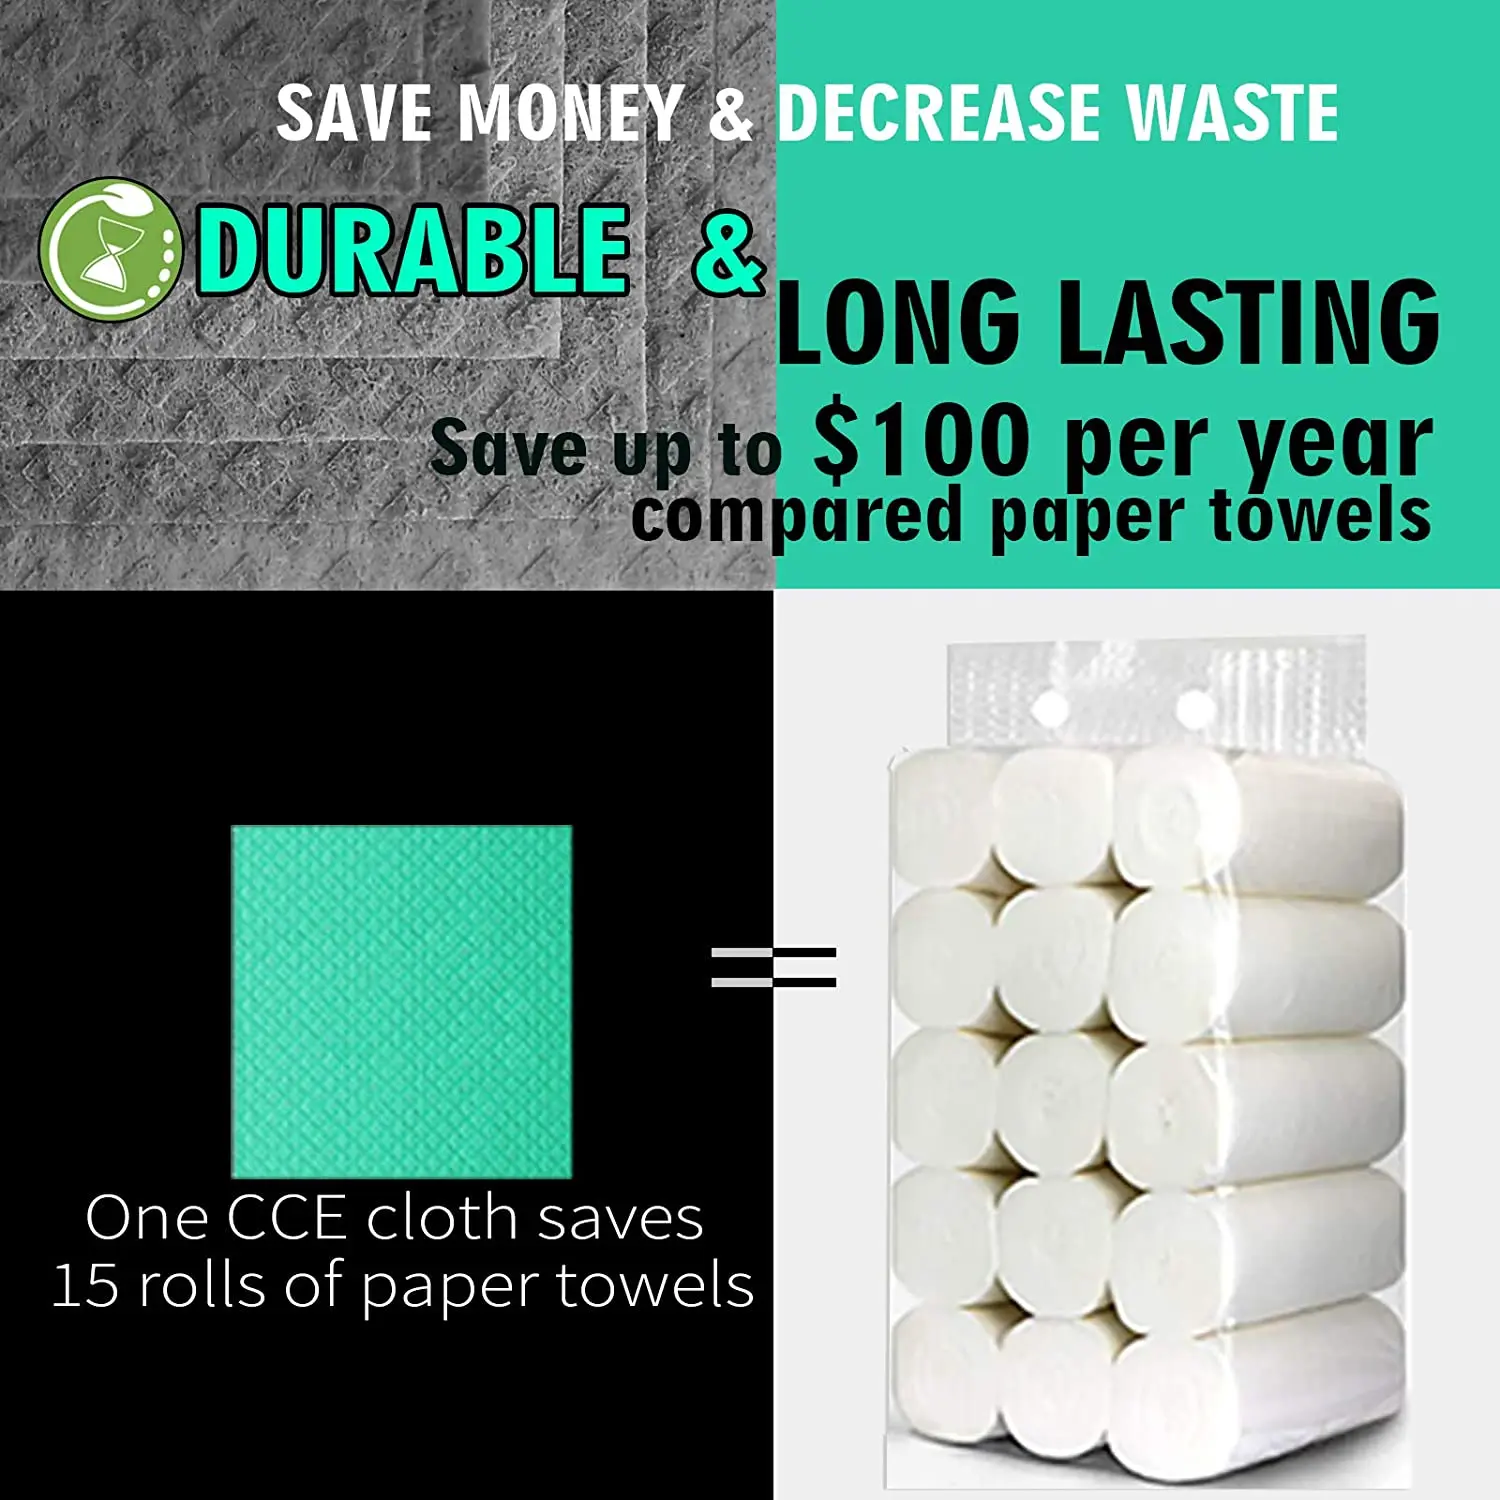  CCE Swedish Dishcloths Cellulose Sponge Cloths, 6 Pack